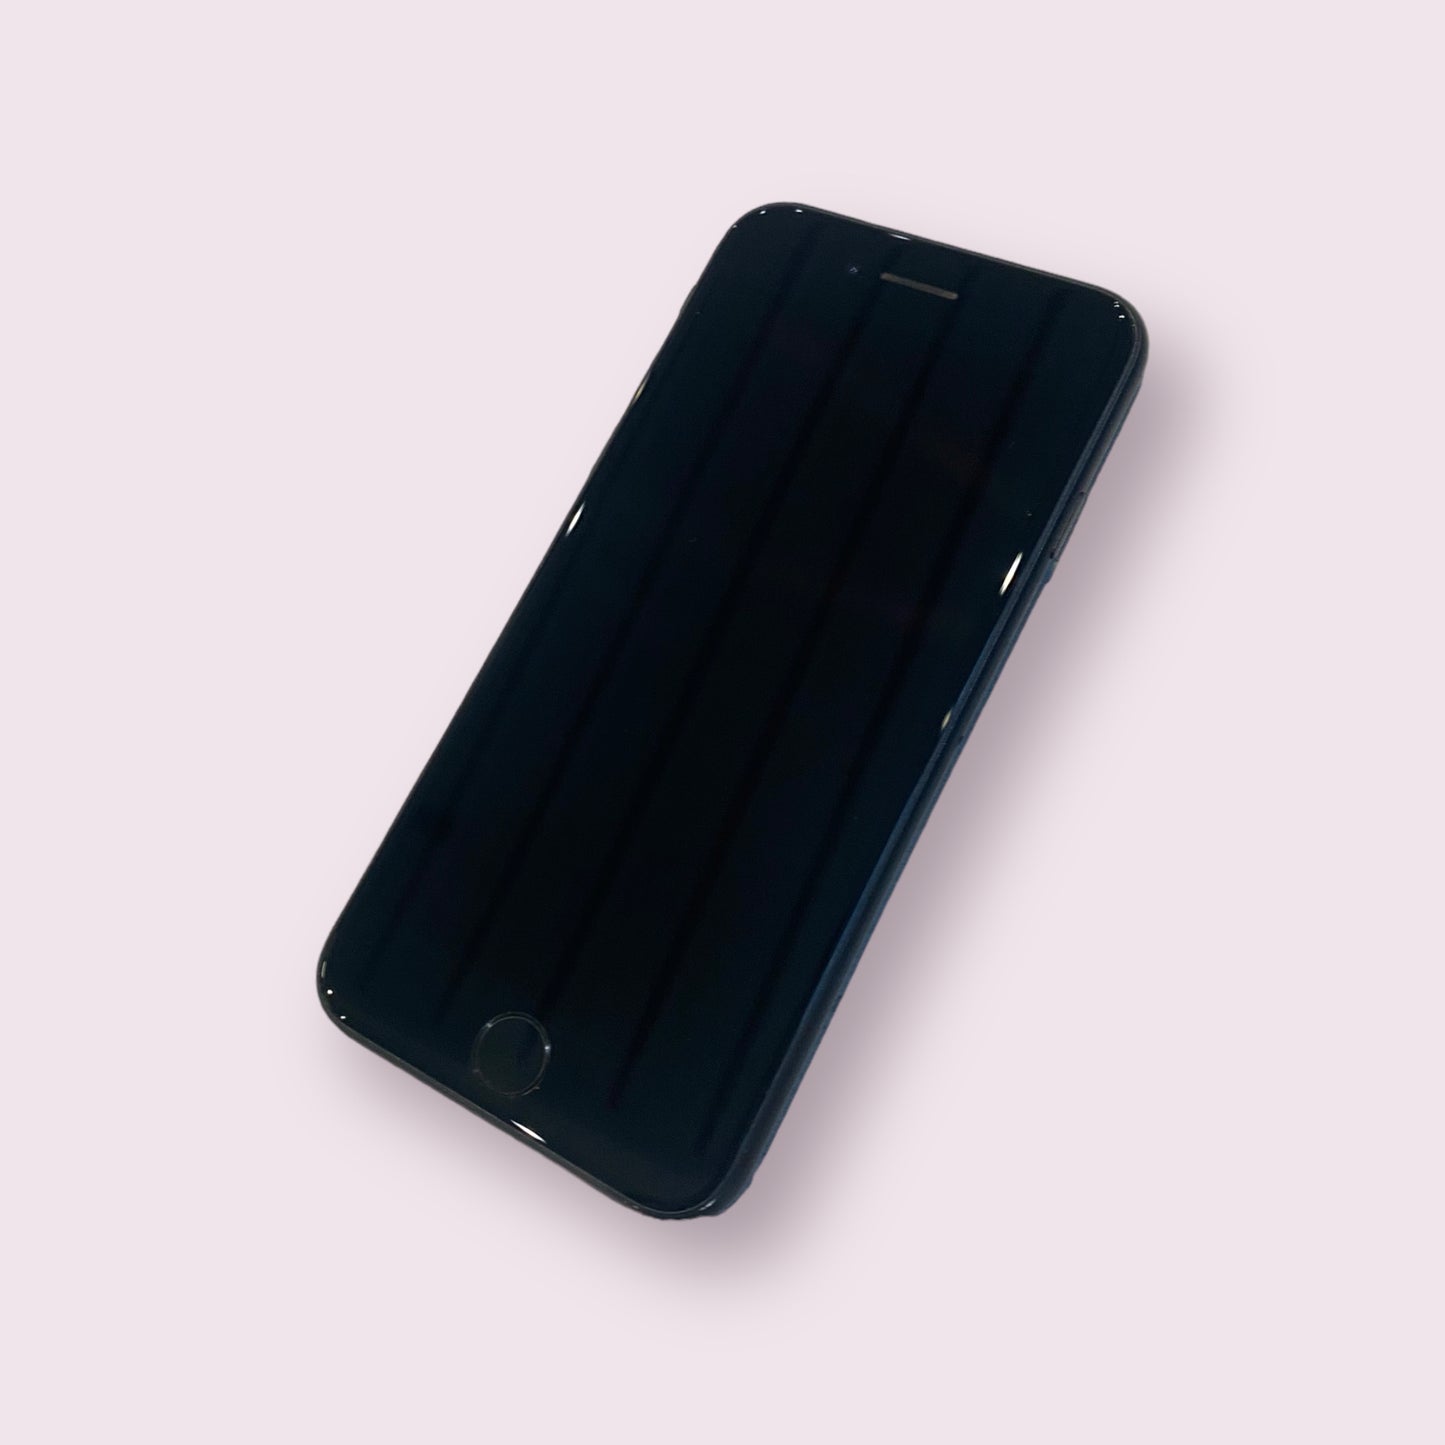 Apple iPhone SE 2020 128GB Black - Unlocked - Grade A - BH 100%